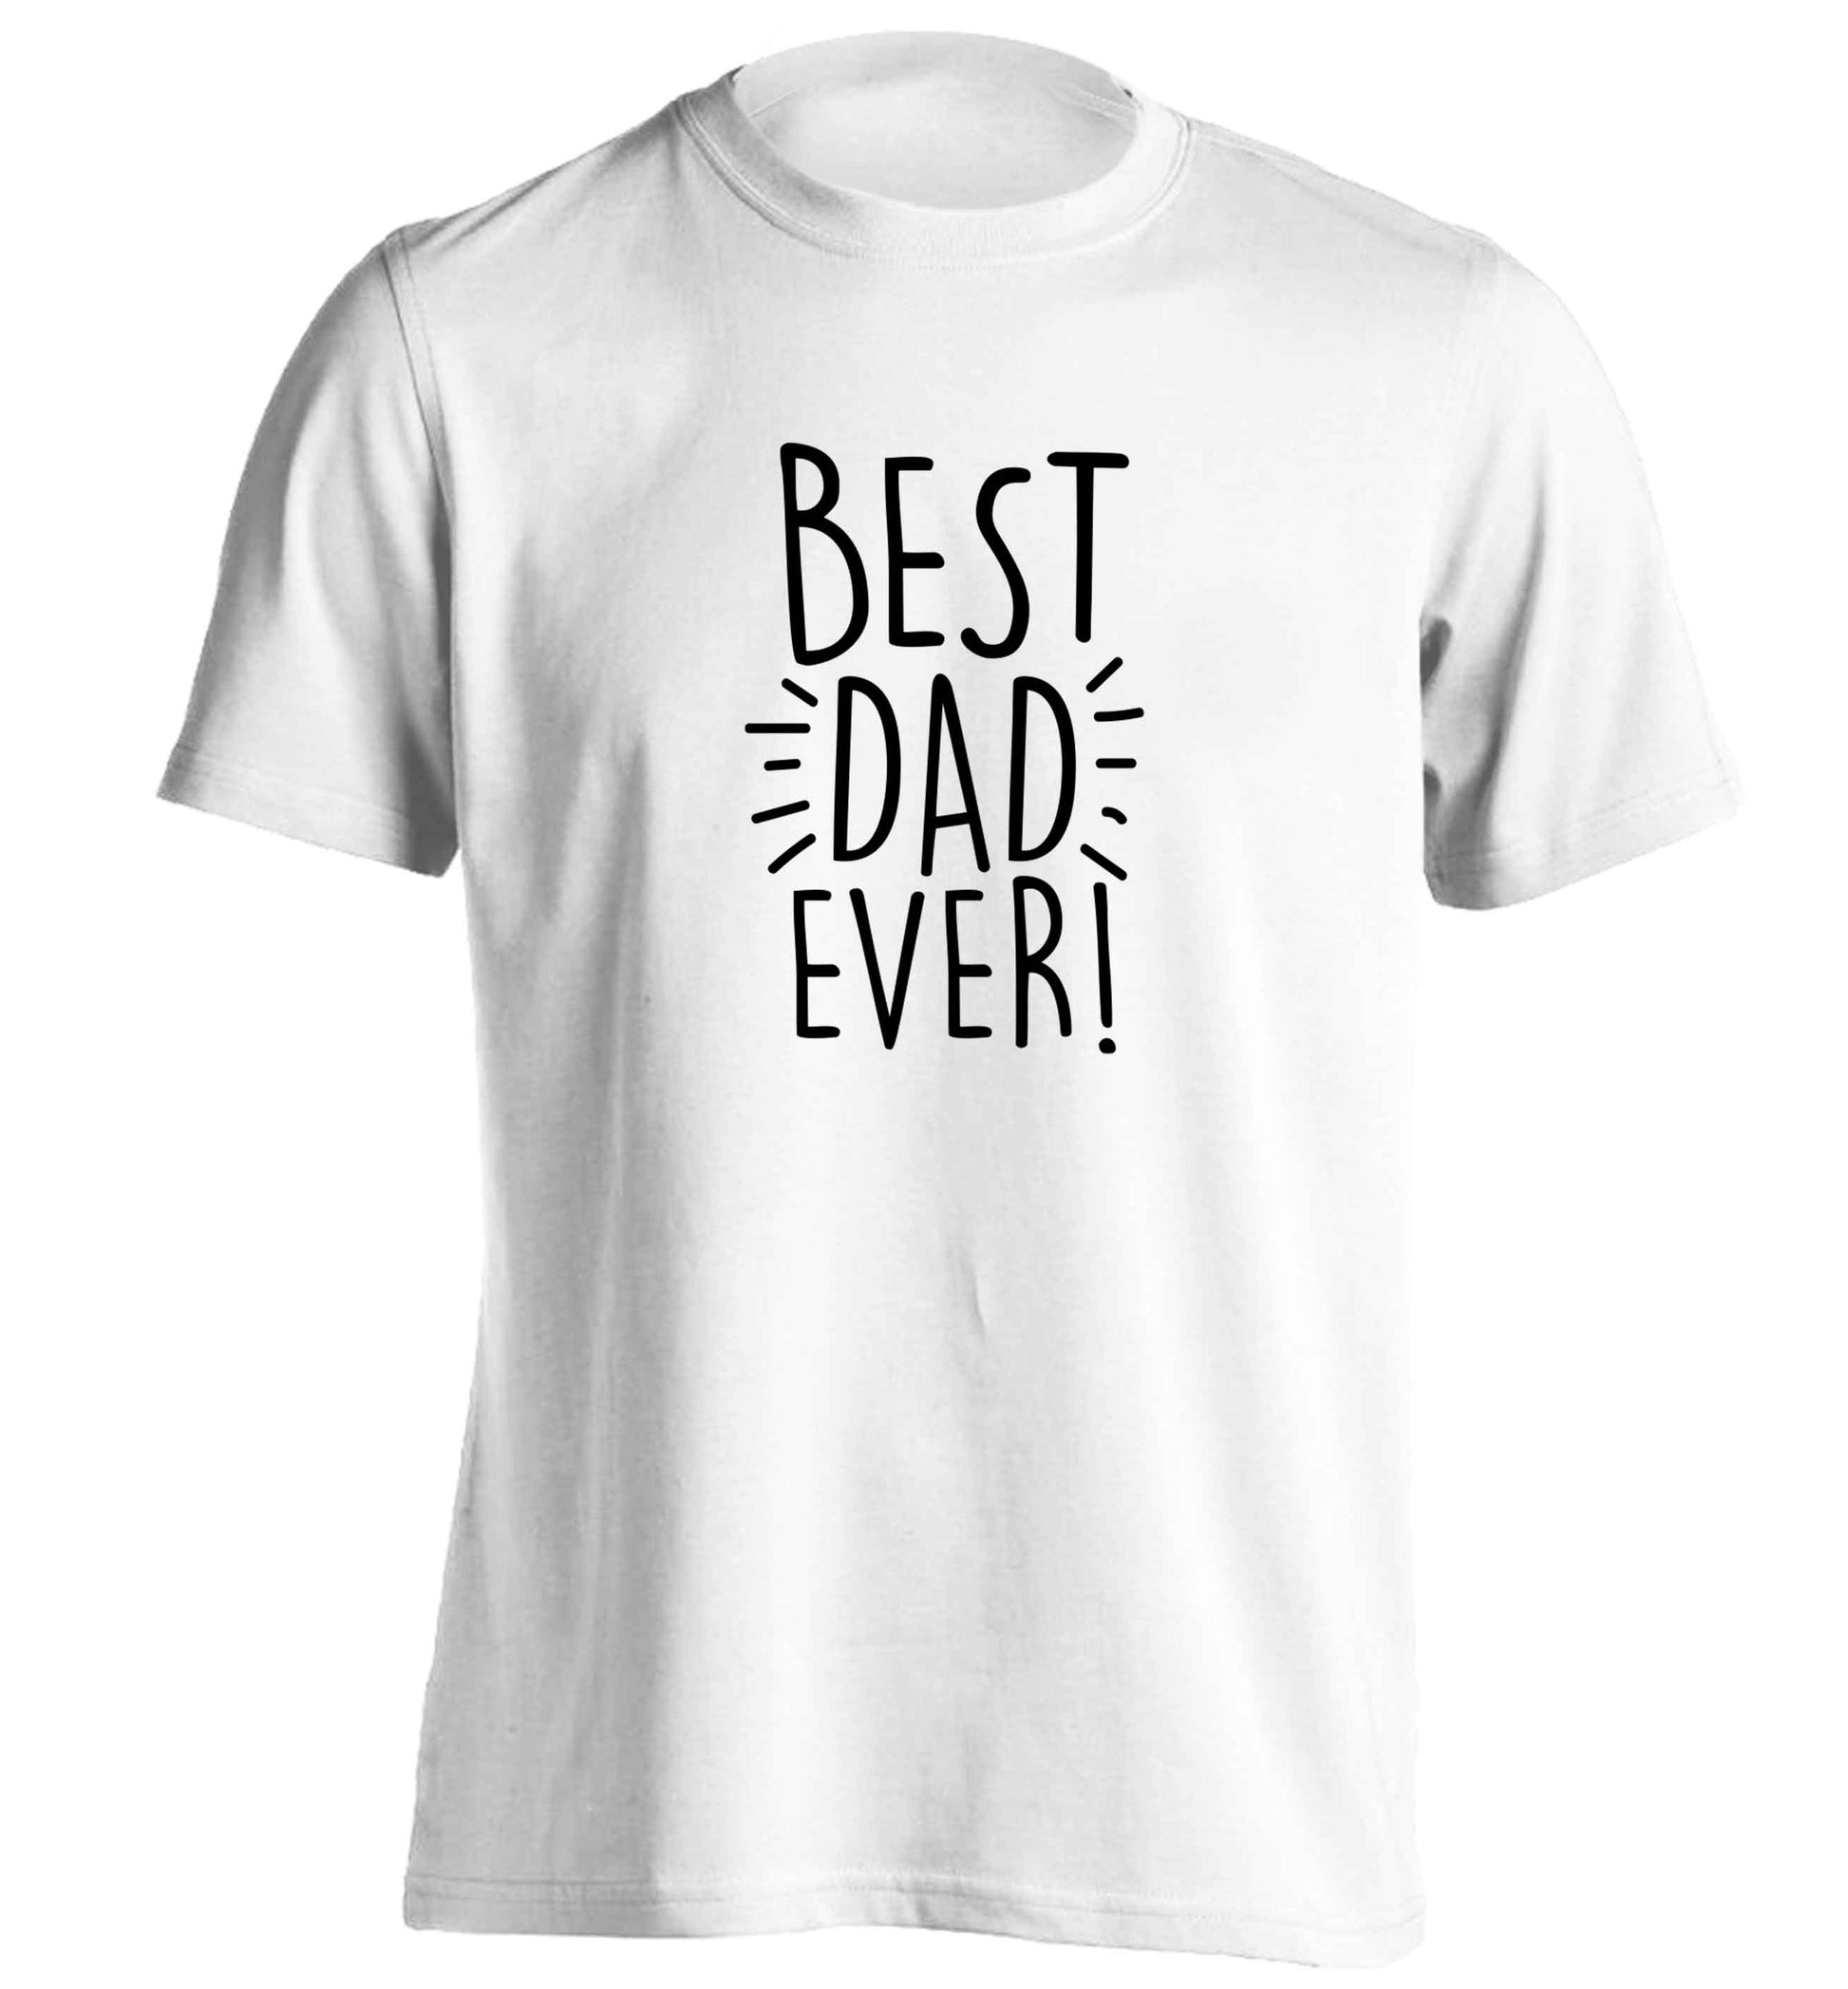 Best dad ever! adults unisex white Tshirt 2XL